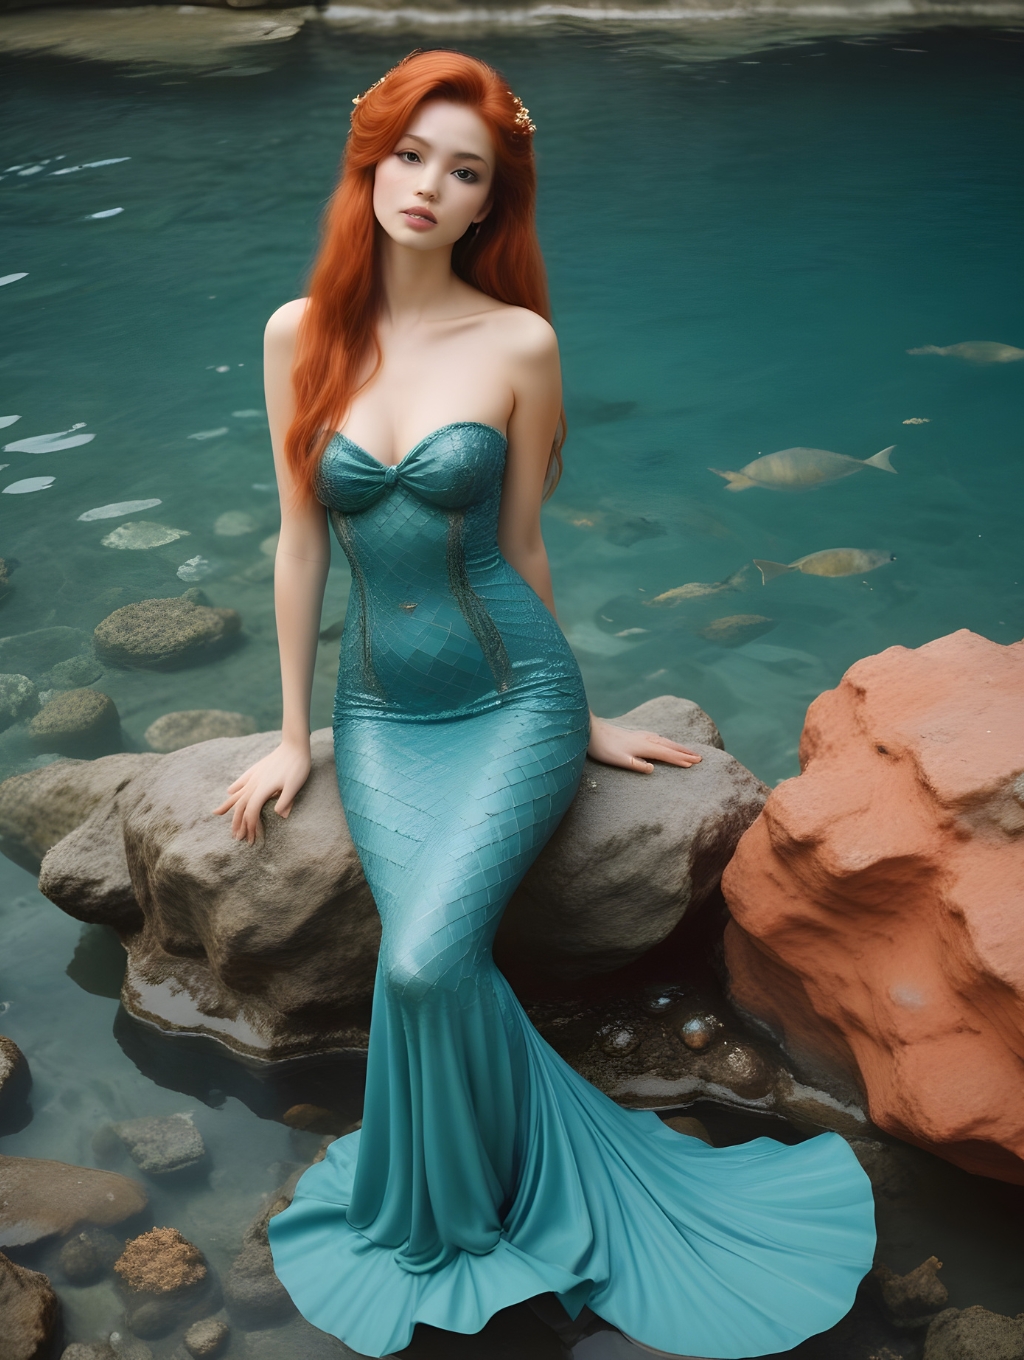 Mermaid: Canvas Prints & Self-Portraits-Theme:4